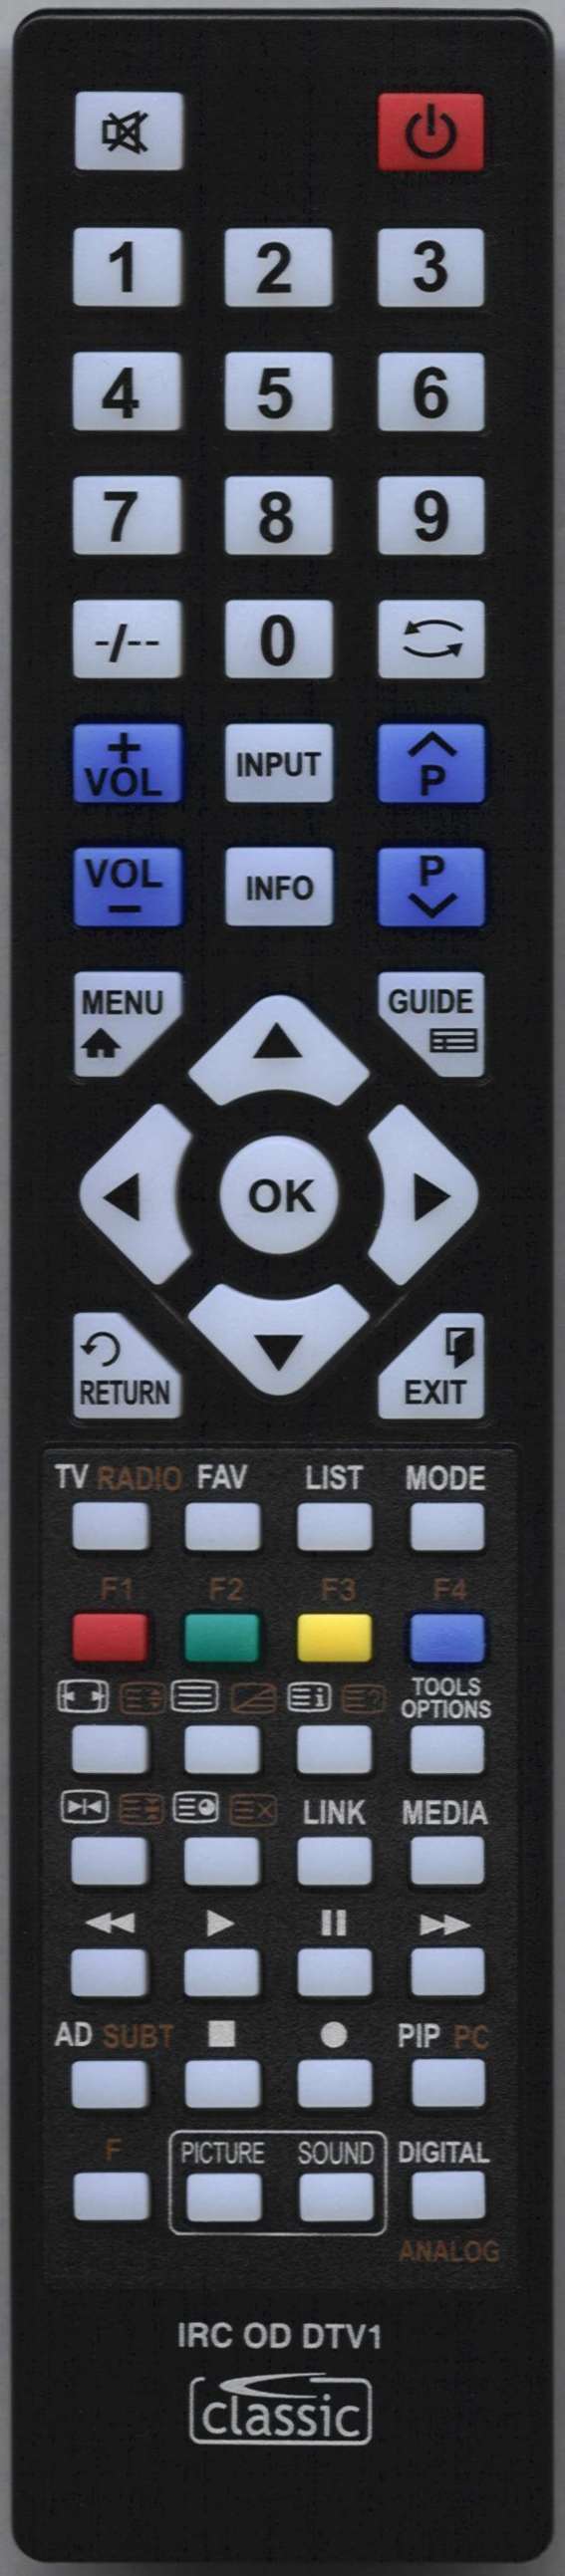 SONY KDL32WD756 Remote Control Alternative 